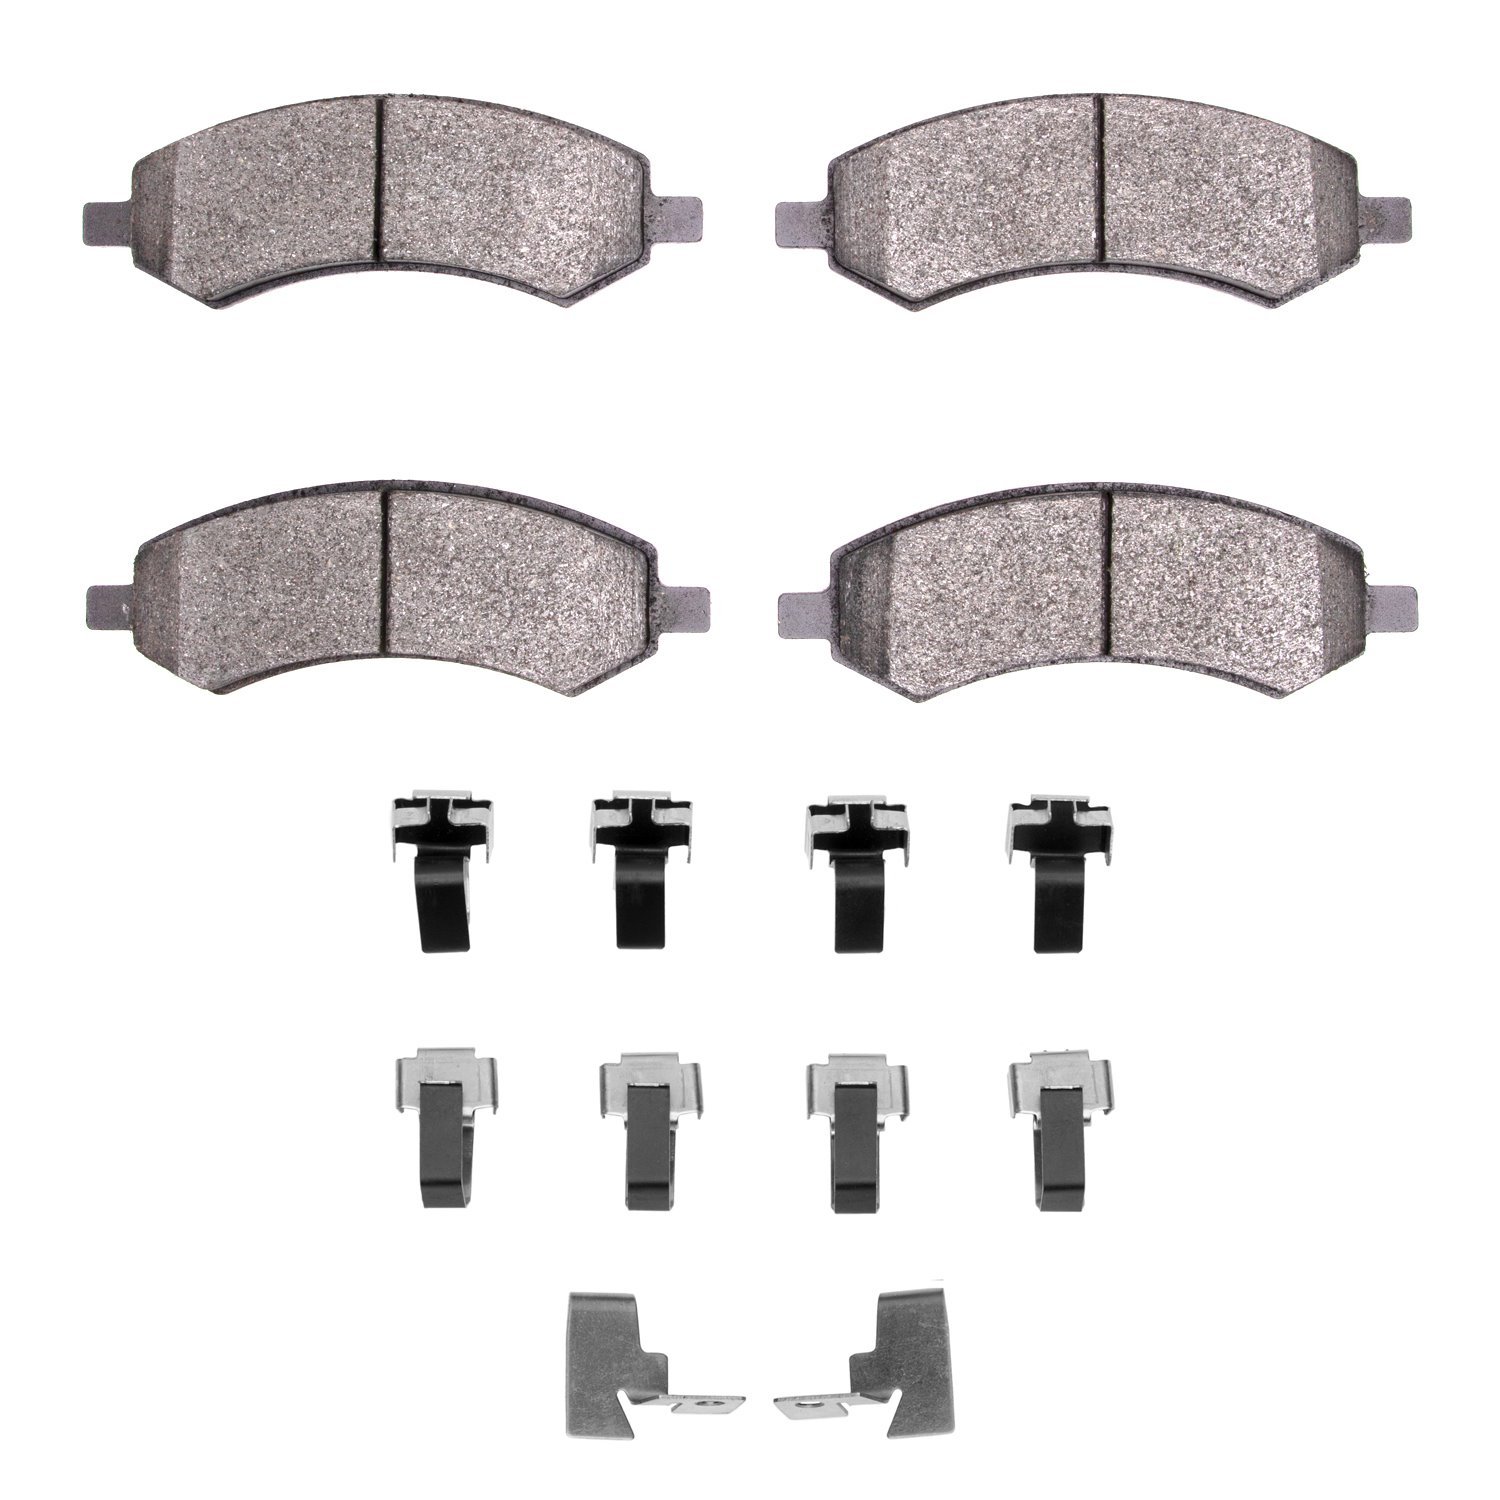 1551-1084-01 5000 Advanced Semi-Metallic Brake Pads & Hardware Kit, Fits Select Multiple Makes/Models, Position: Front